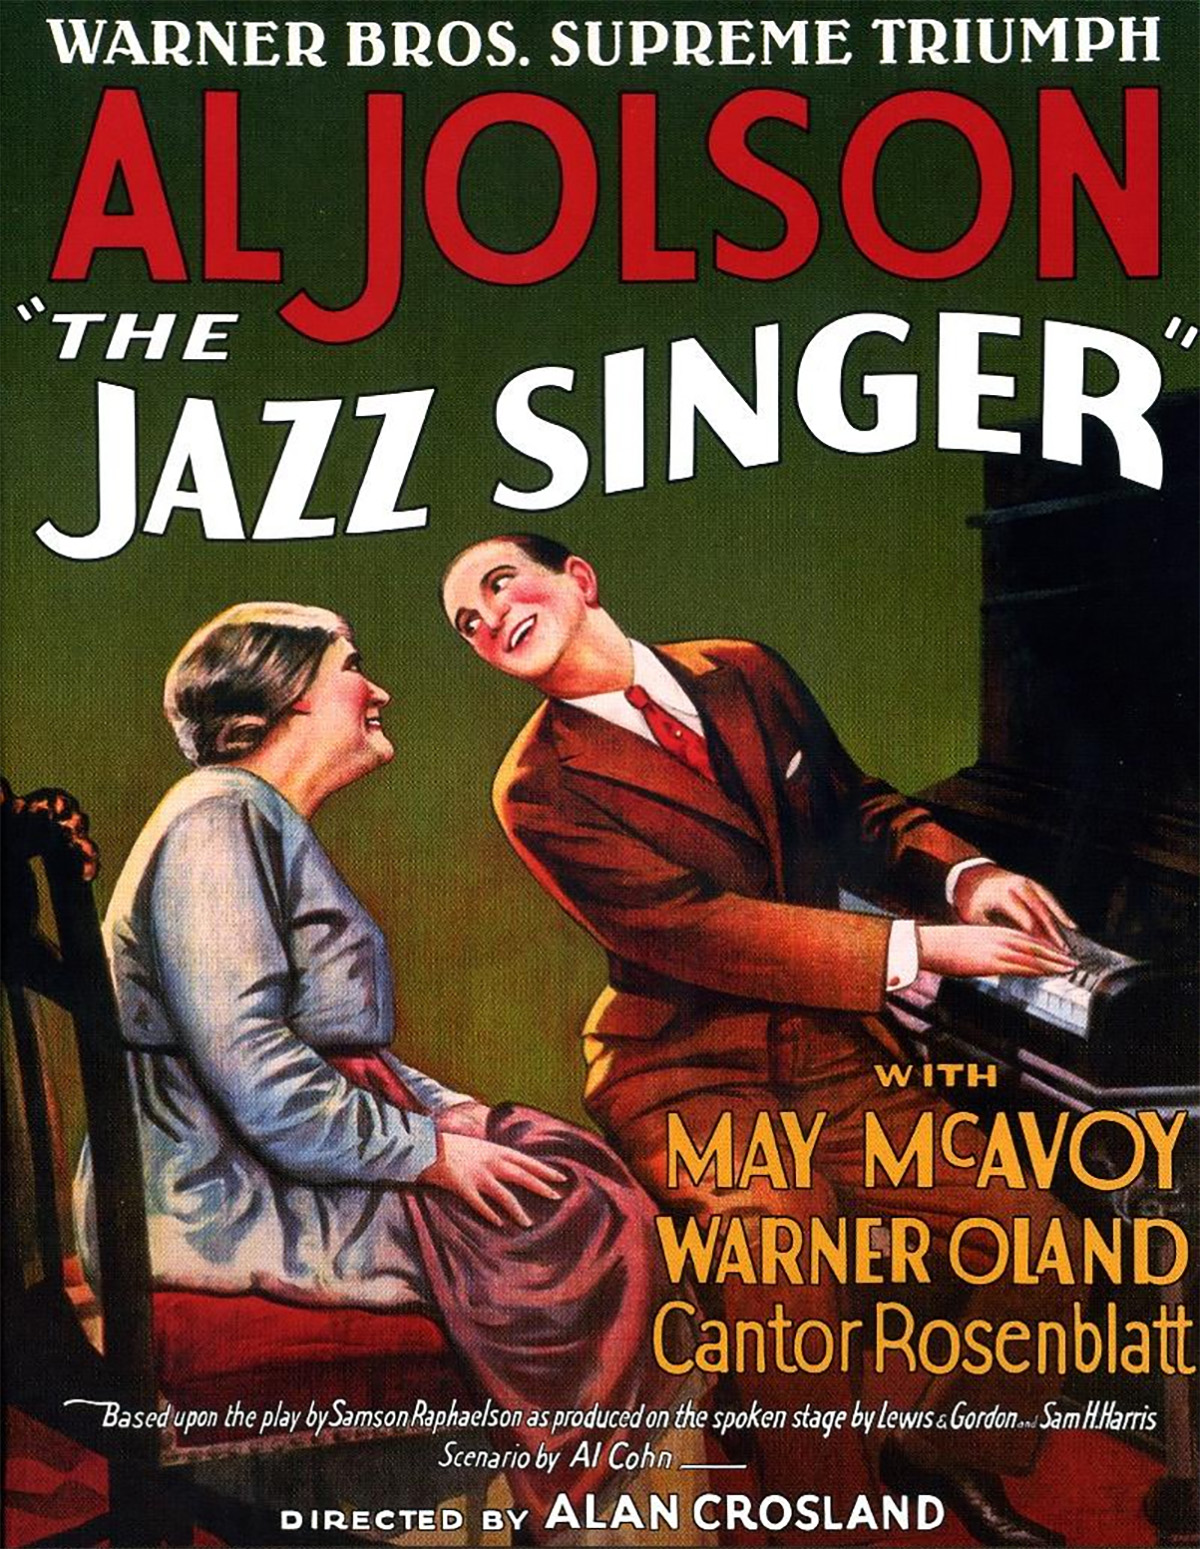 The Jazz Singer (poster 1927)